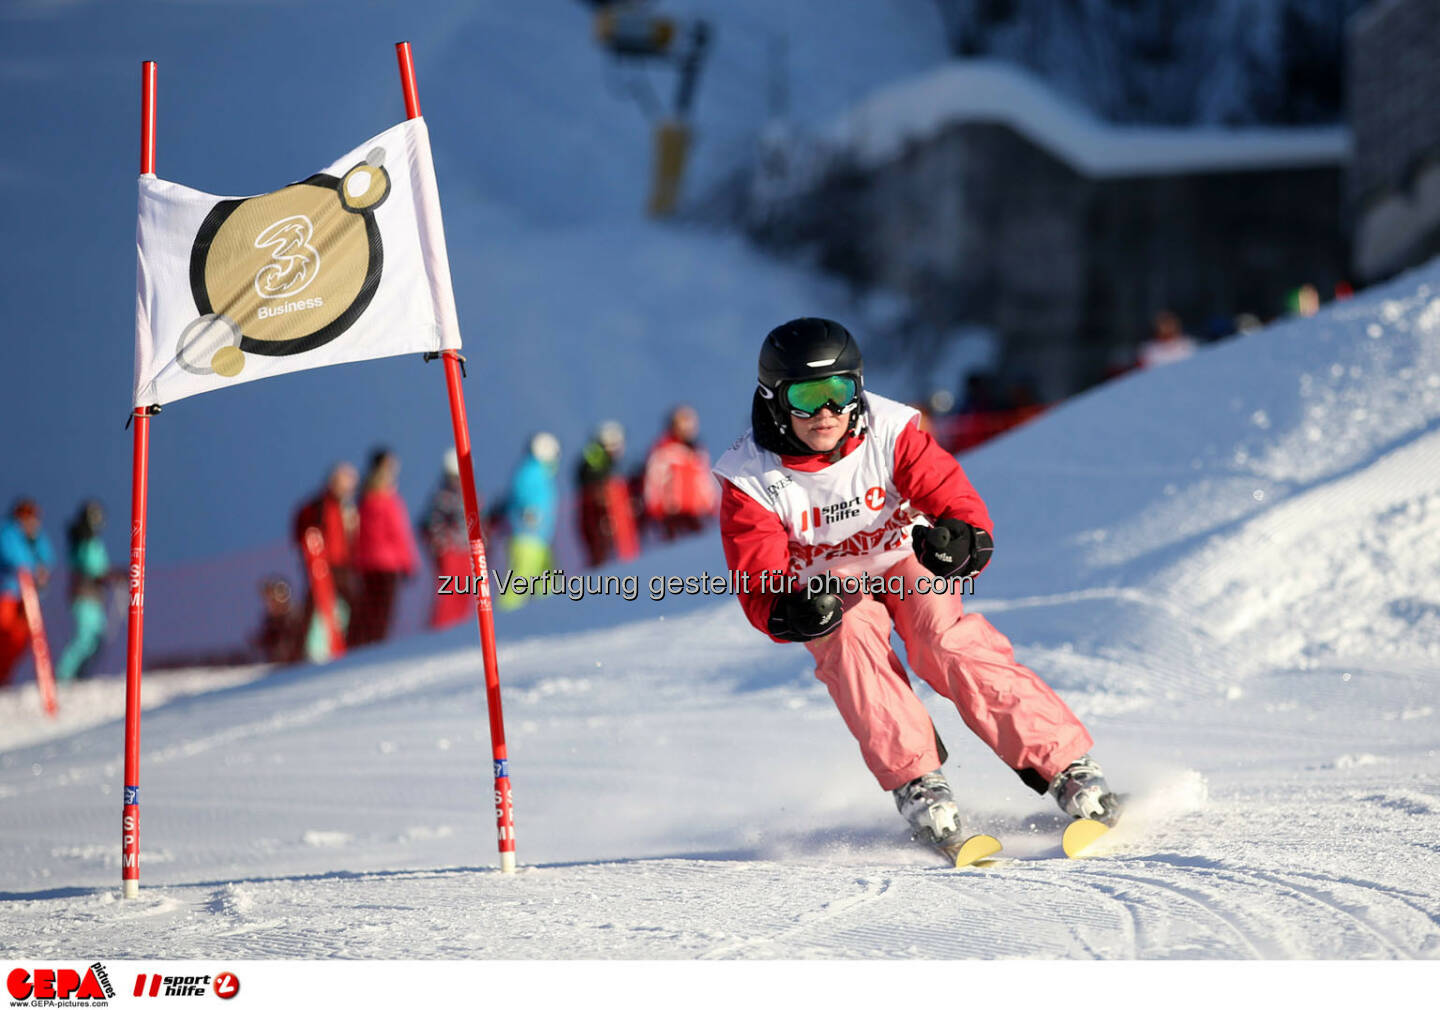 Ski for Gold Charity Race. Image shows Marisa Burger. Photo: GEPA pictures/ Daniel Goetzhaber